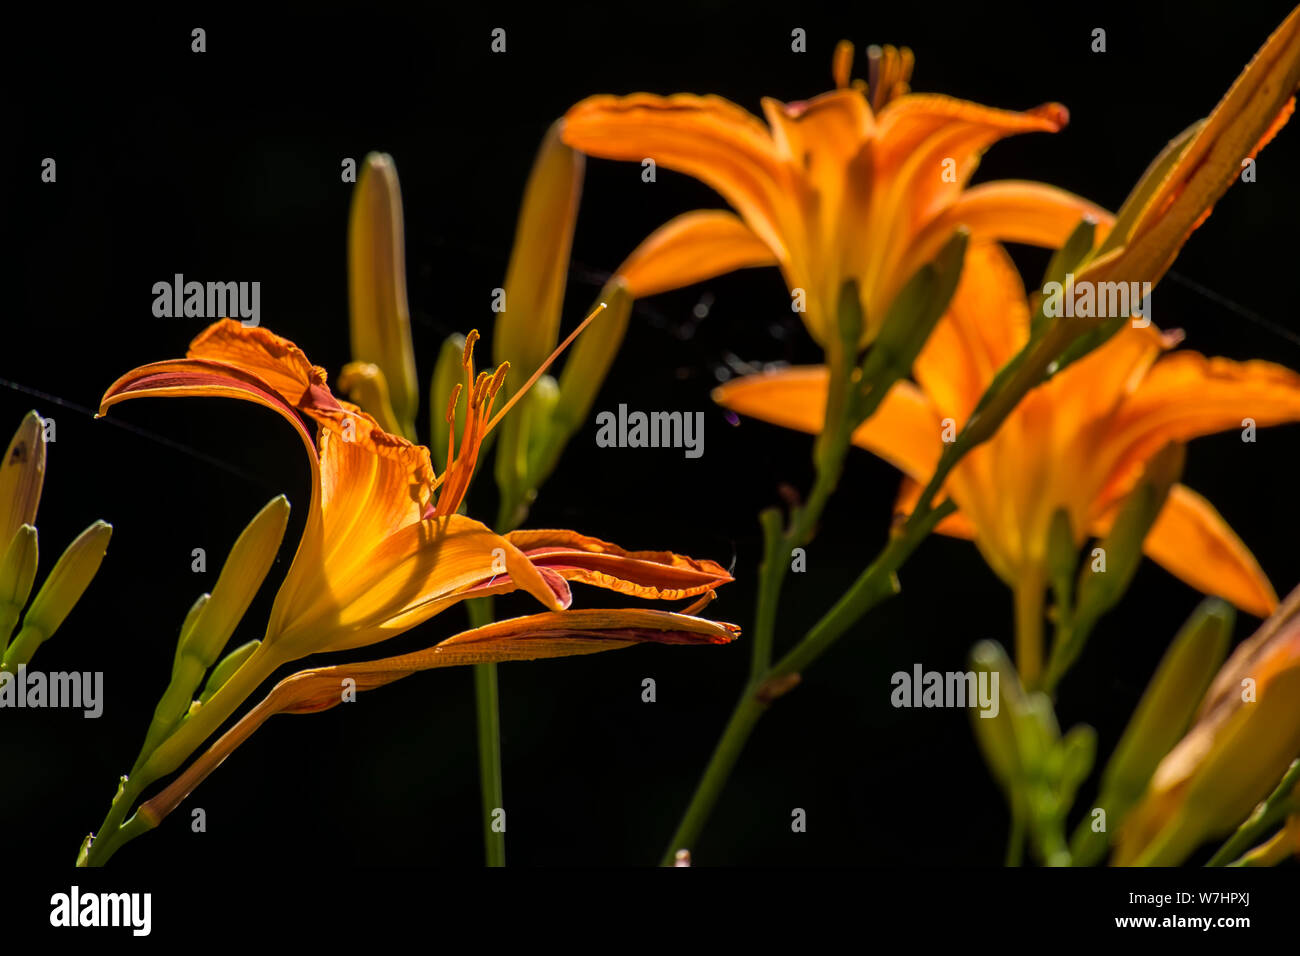 Vibrant orange Asian Lilies on black background (Lilium) Stock Photo